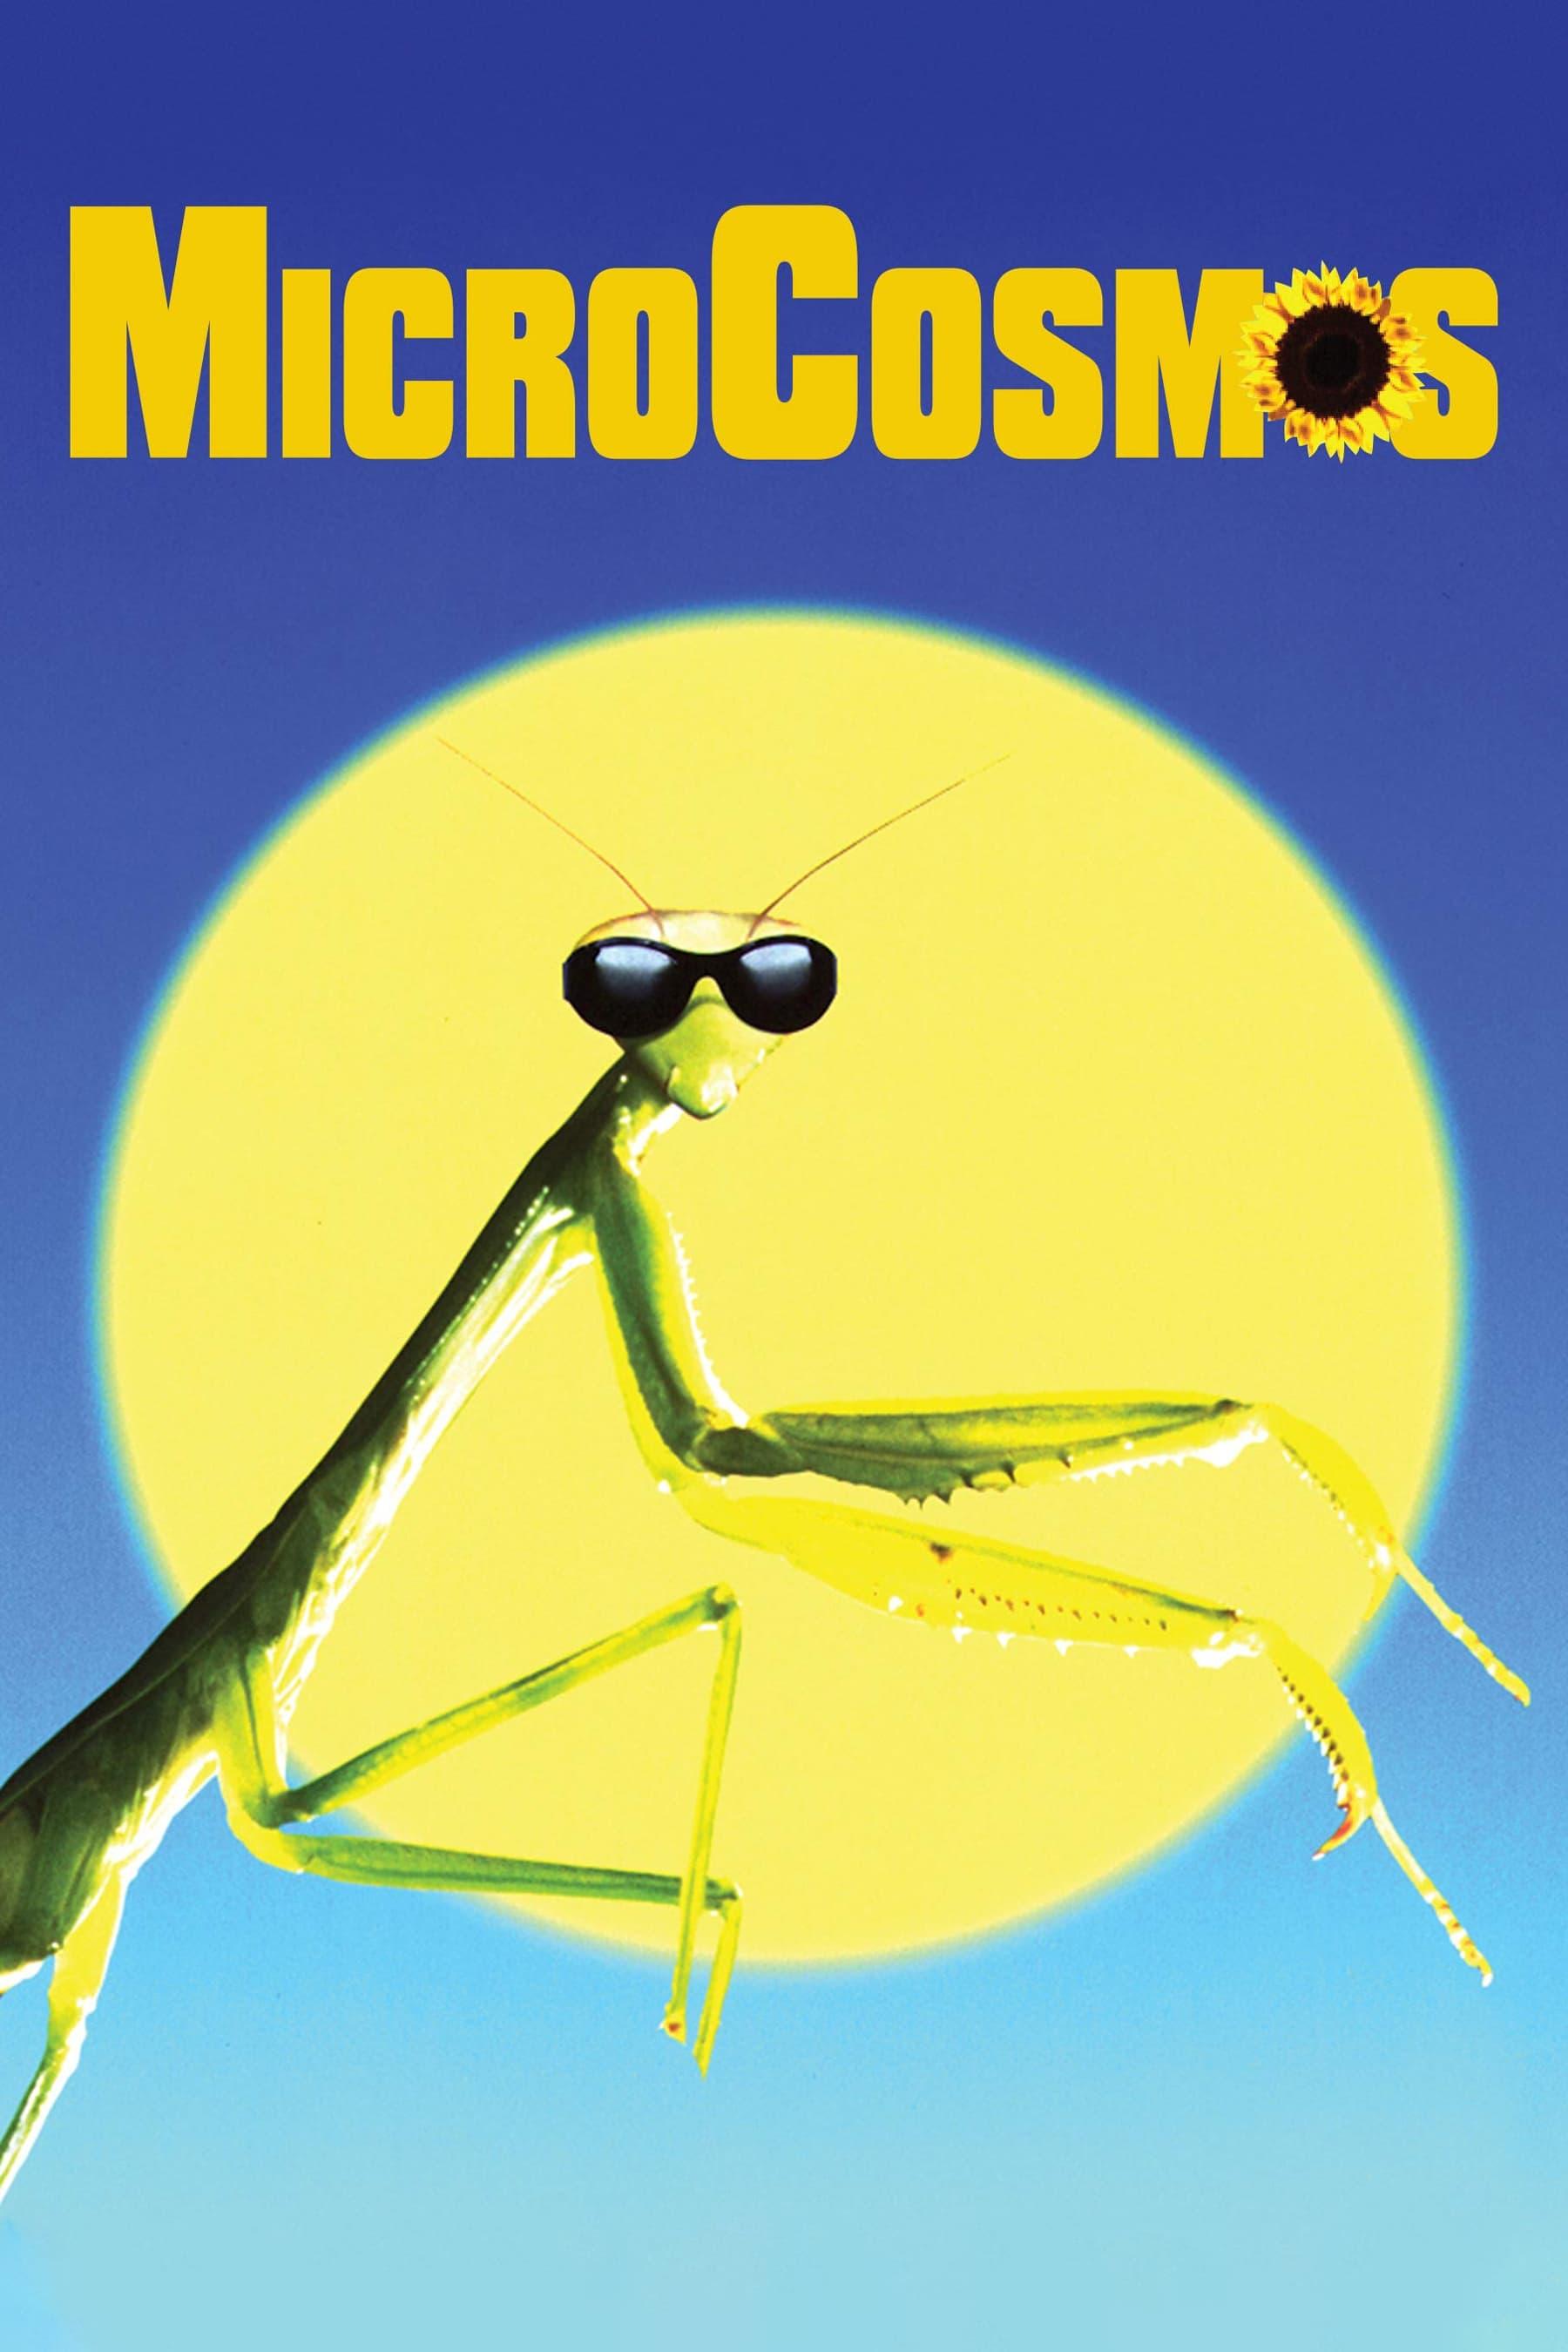 Microcosmos poster